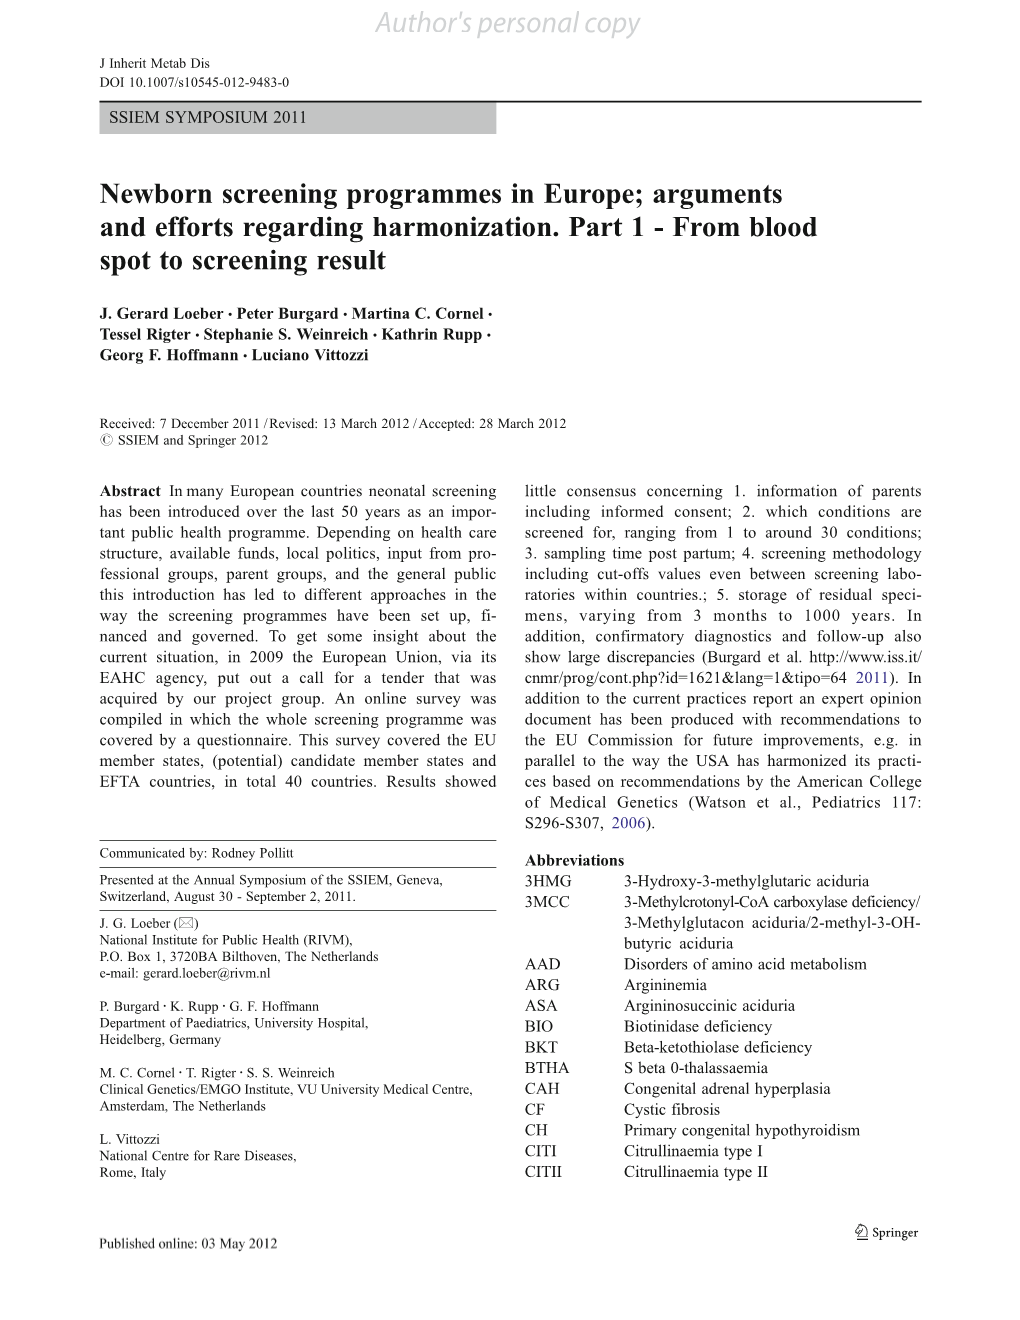 Newborn Screening Programmes in Europe; Arguments and Efforts Regarding Harmonization